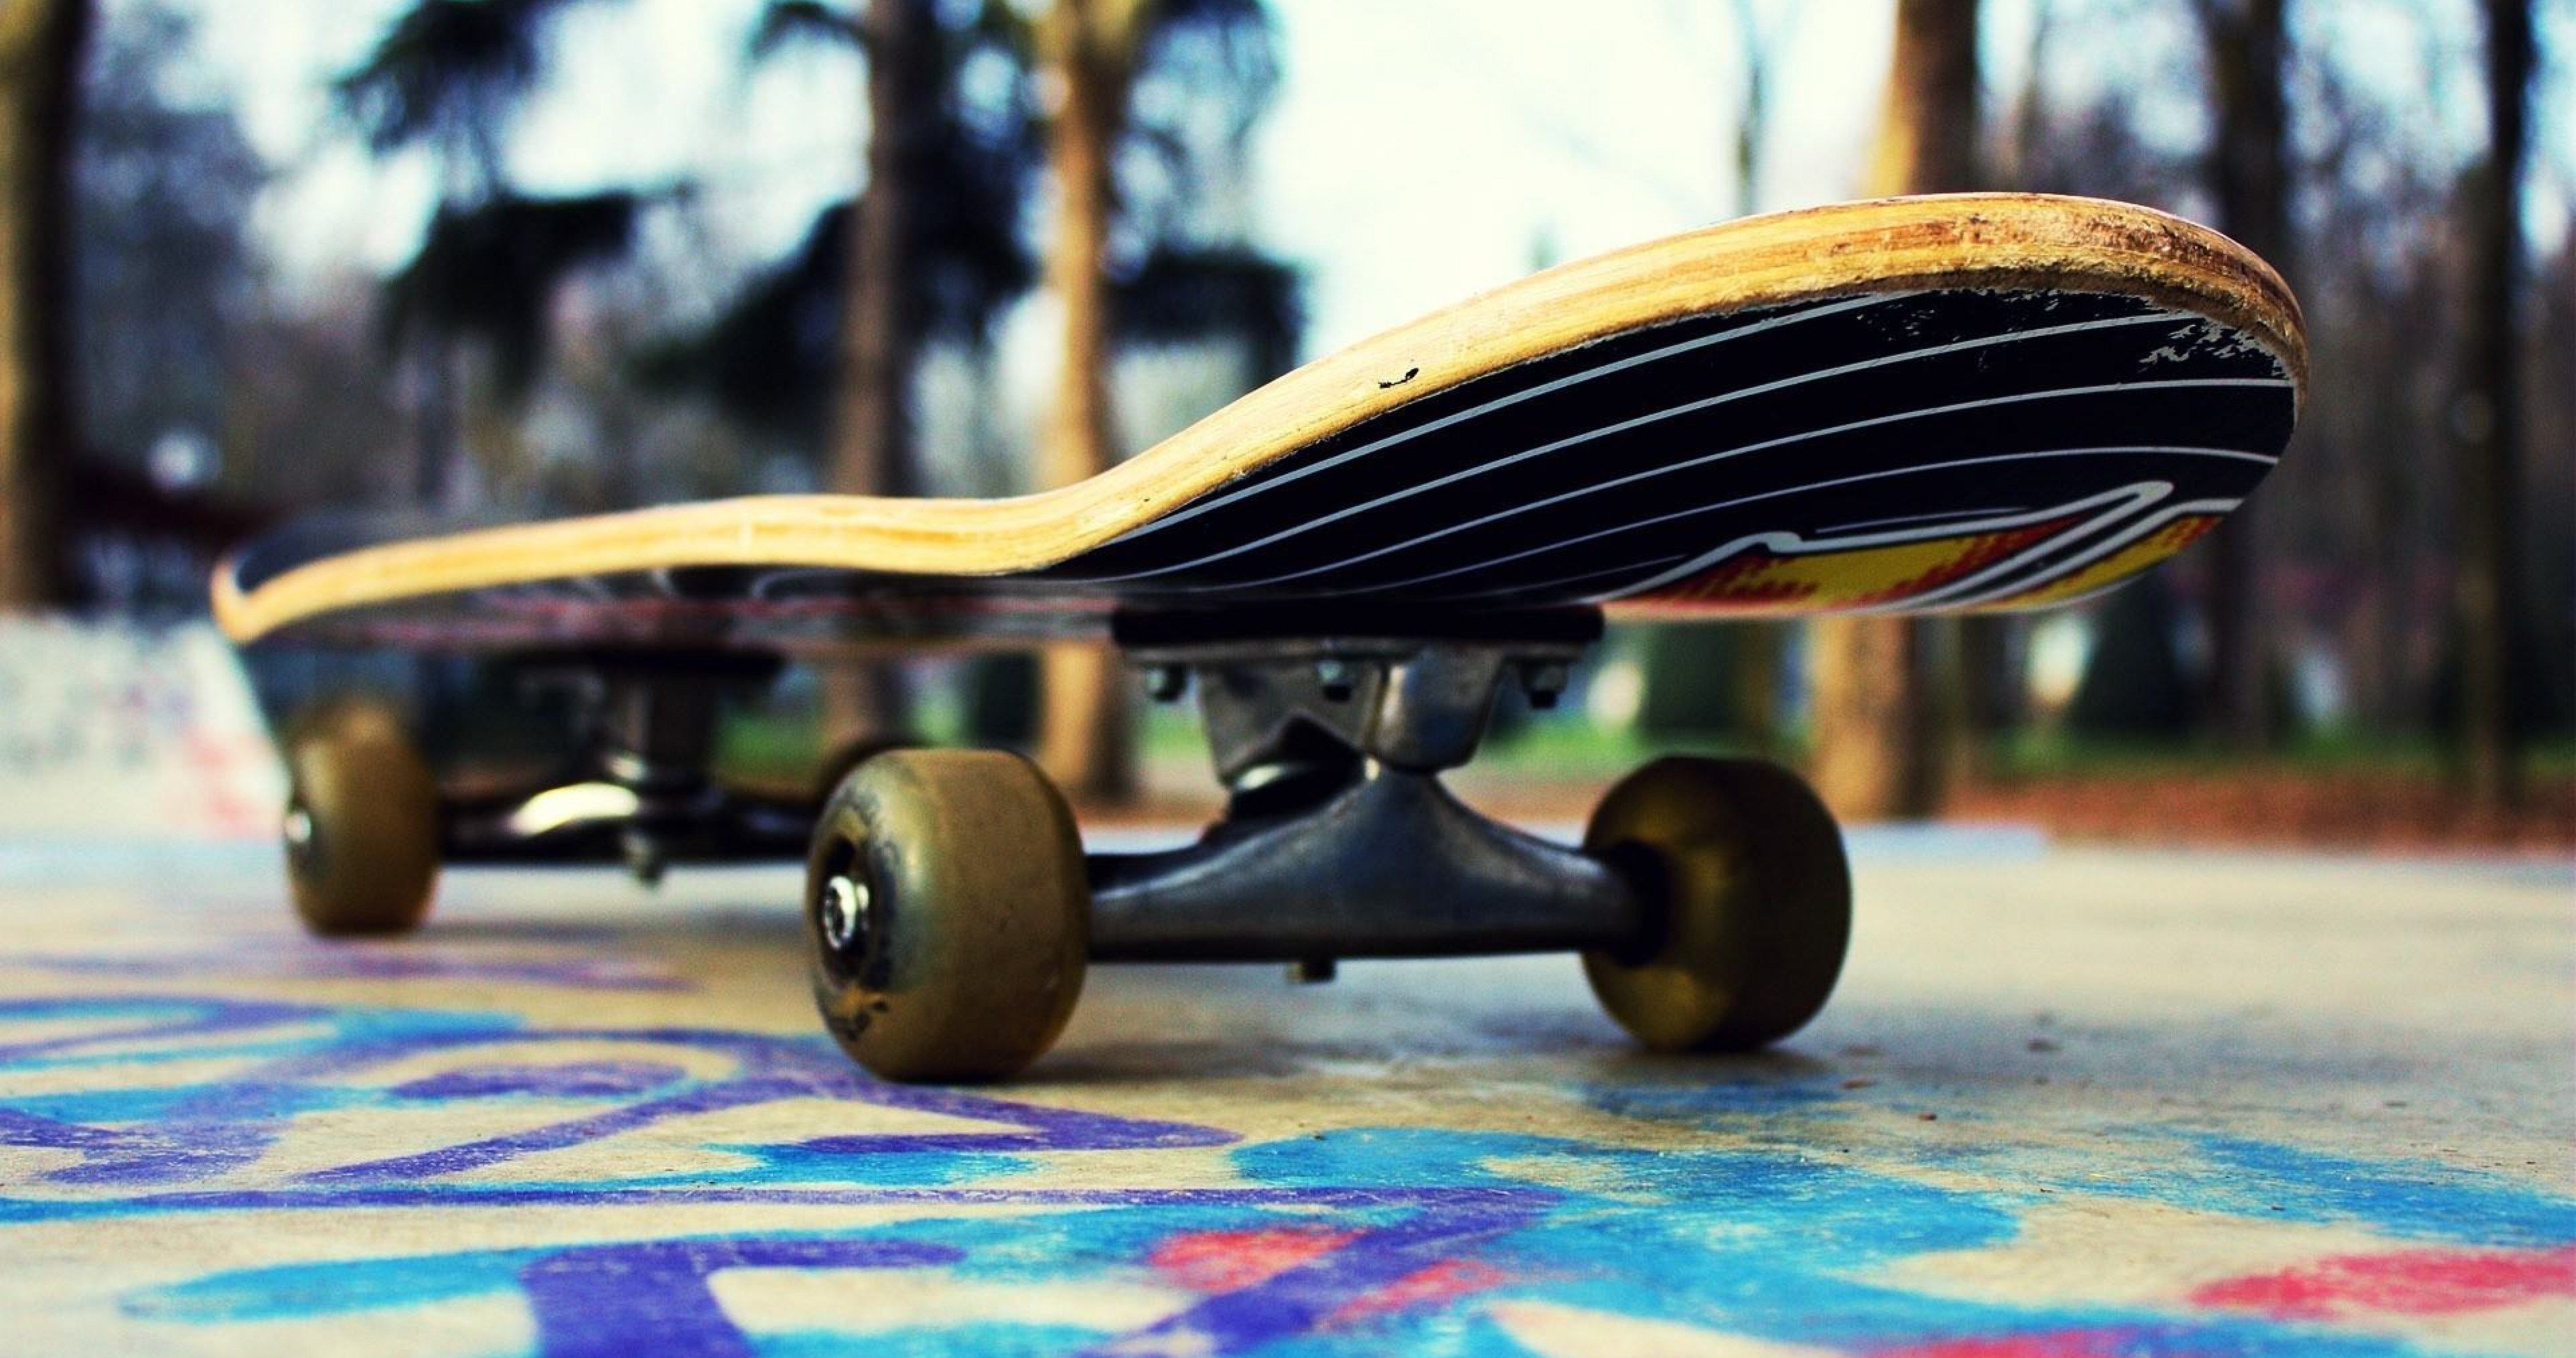 cool skateboard wallpapers,skateboarding equipment,skateboard,longboard,longboarding,skateboarding